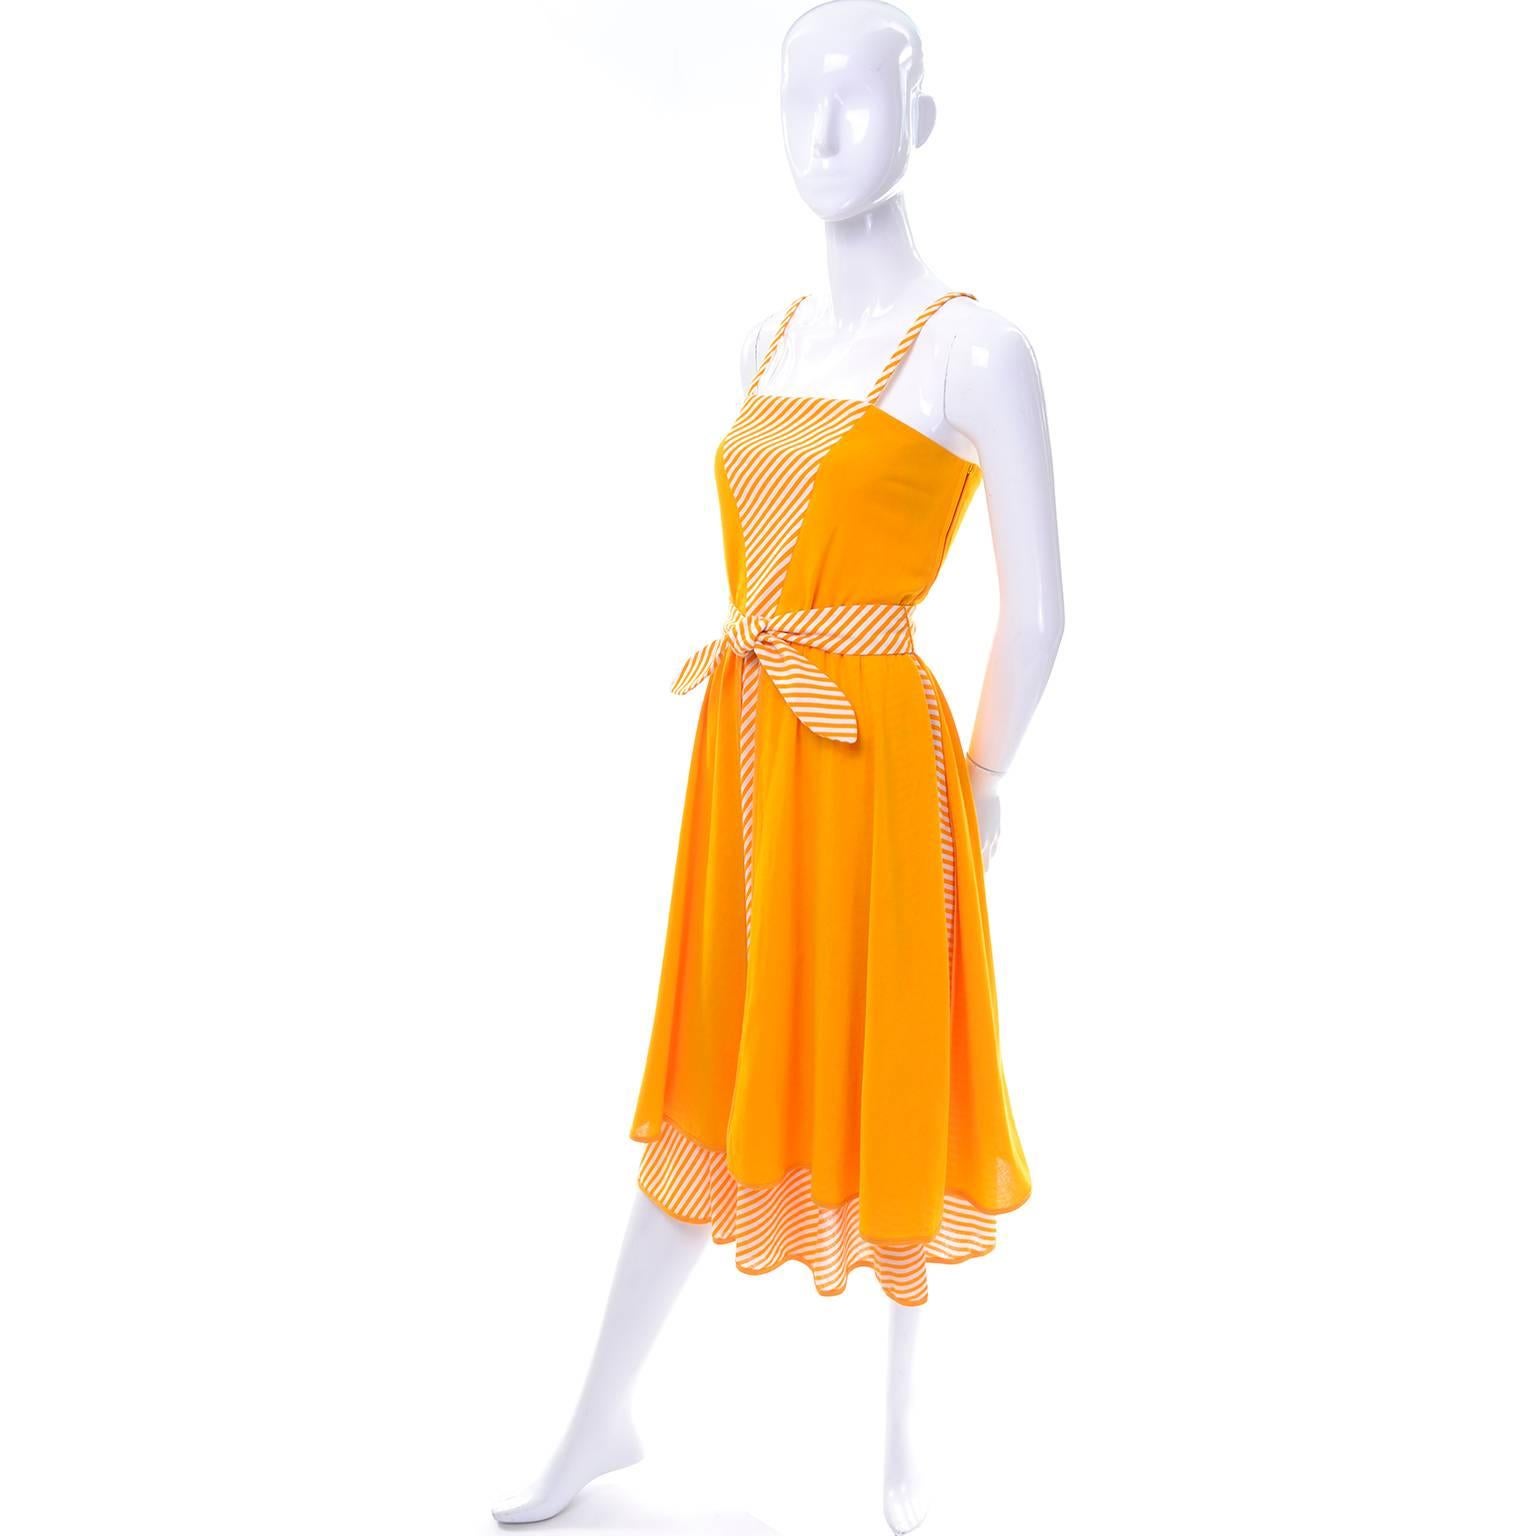 lanvin yellow dress